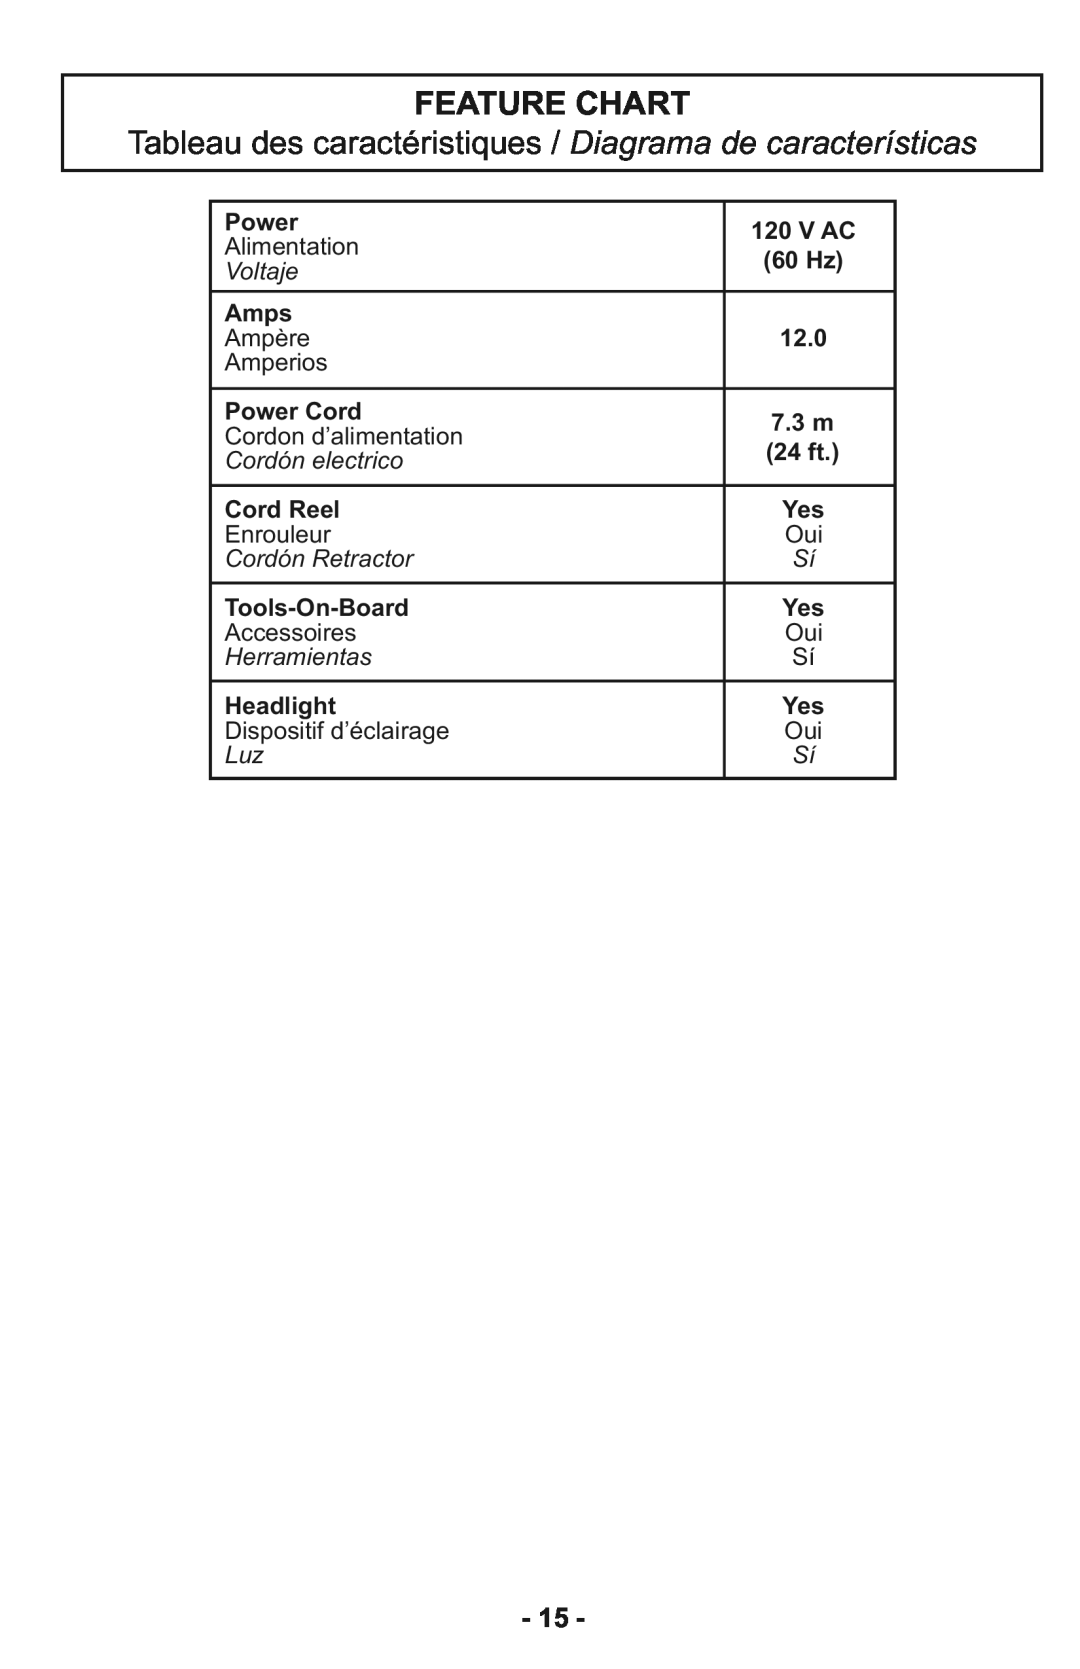 Panasonic MC-CG937 manuel dutilisation Feature Chart 